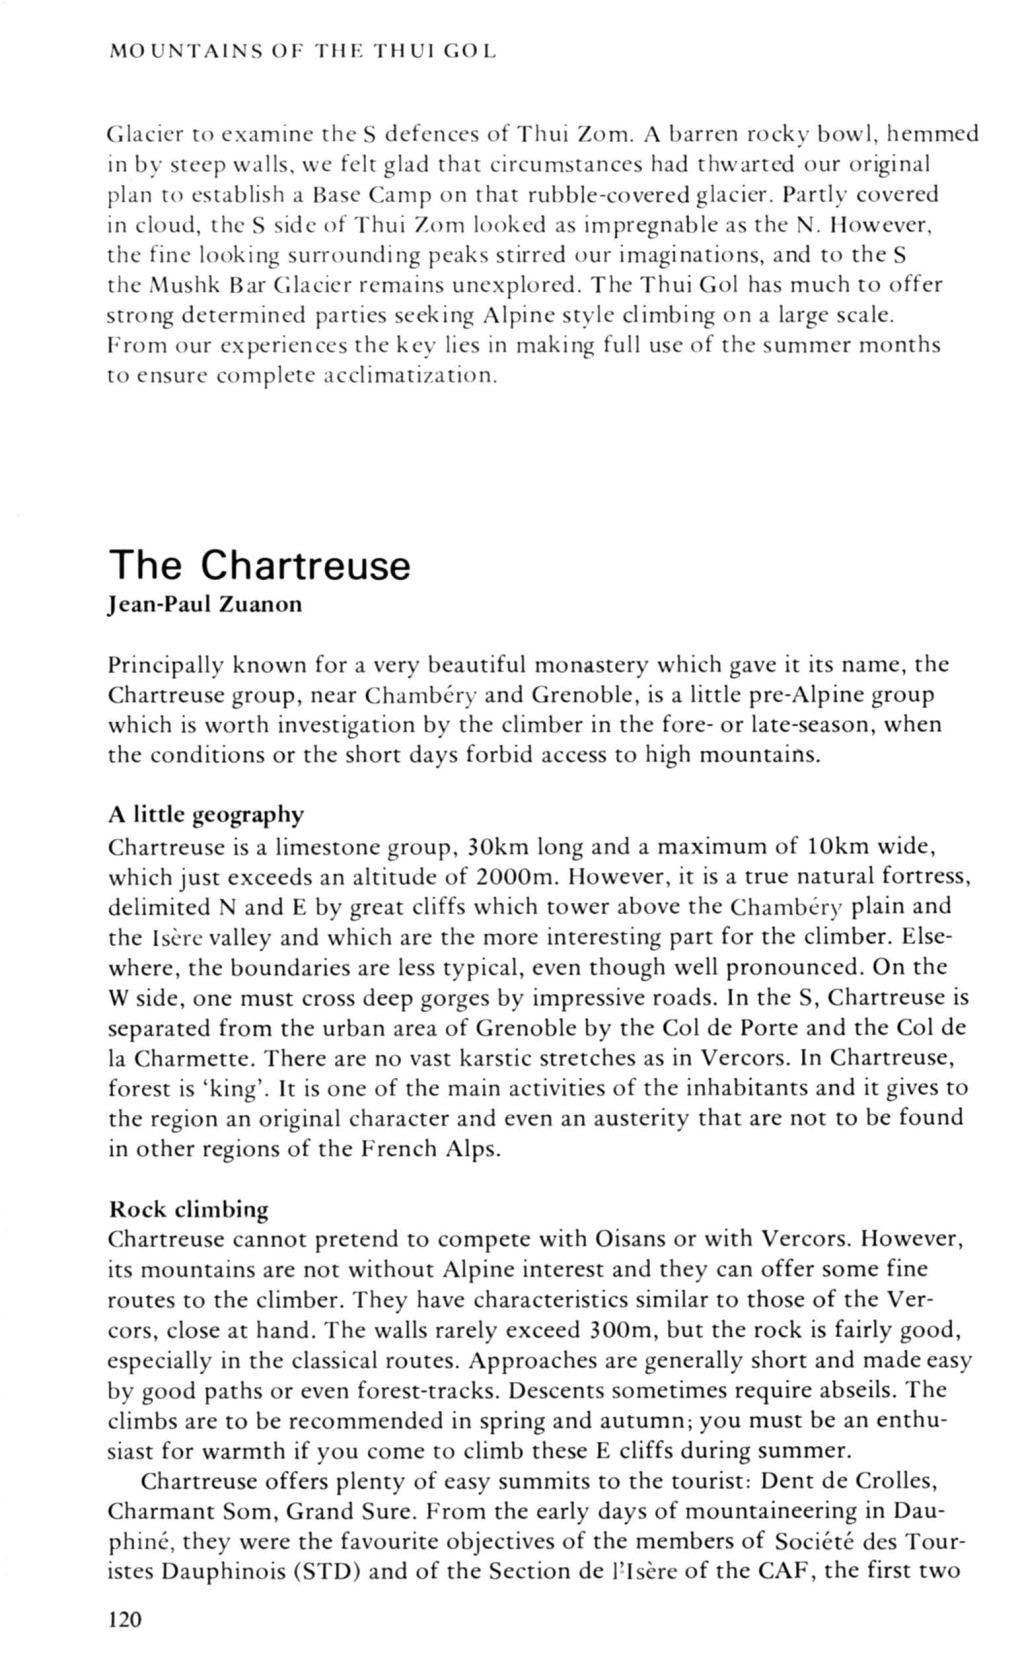 The Chartreuse Jean-Paul Zuanon